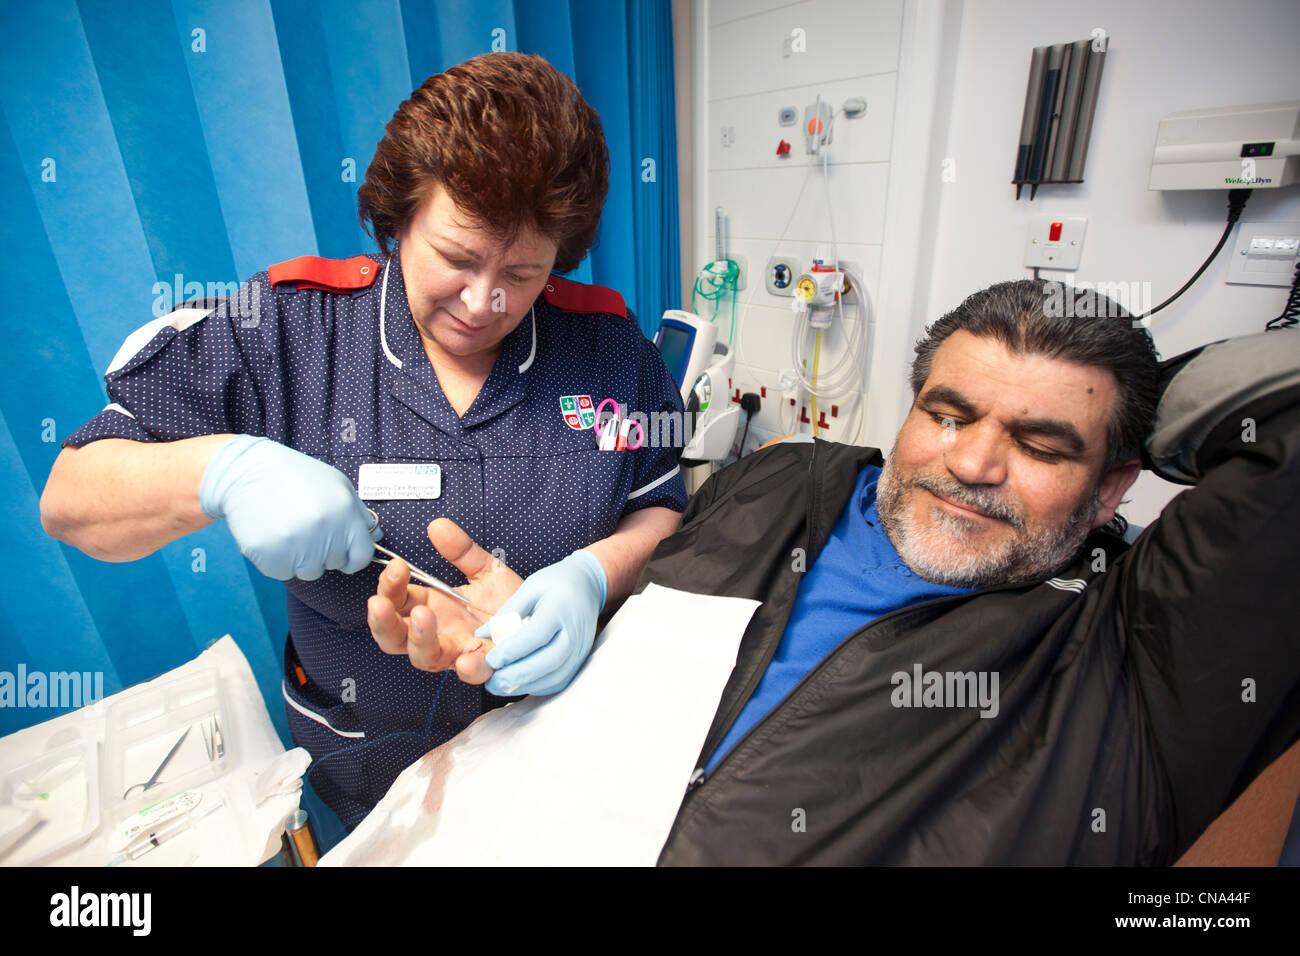 A nurse stitches a mans hand in A&E Stock Photo